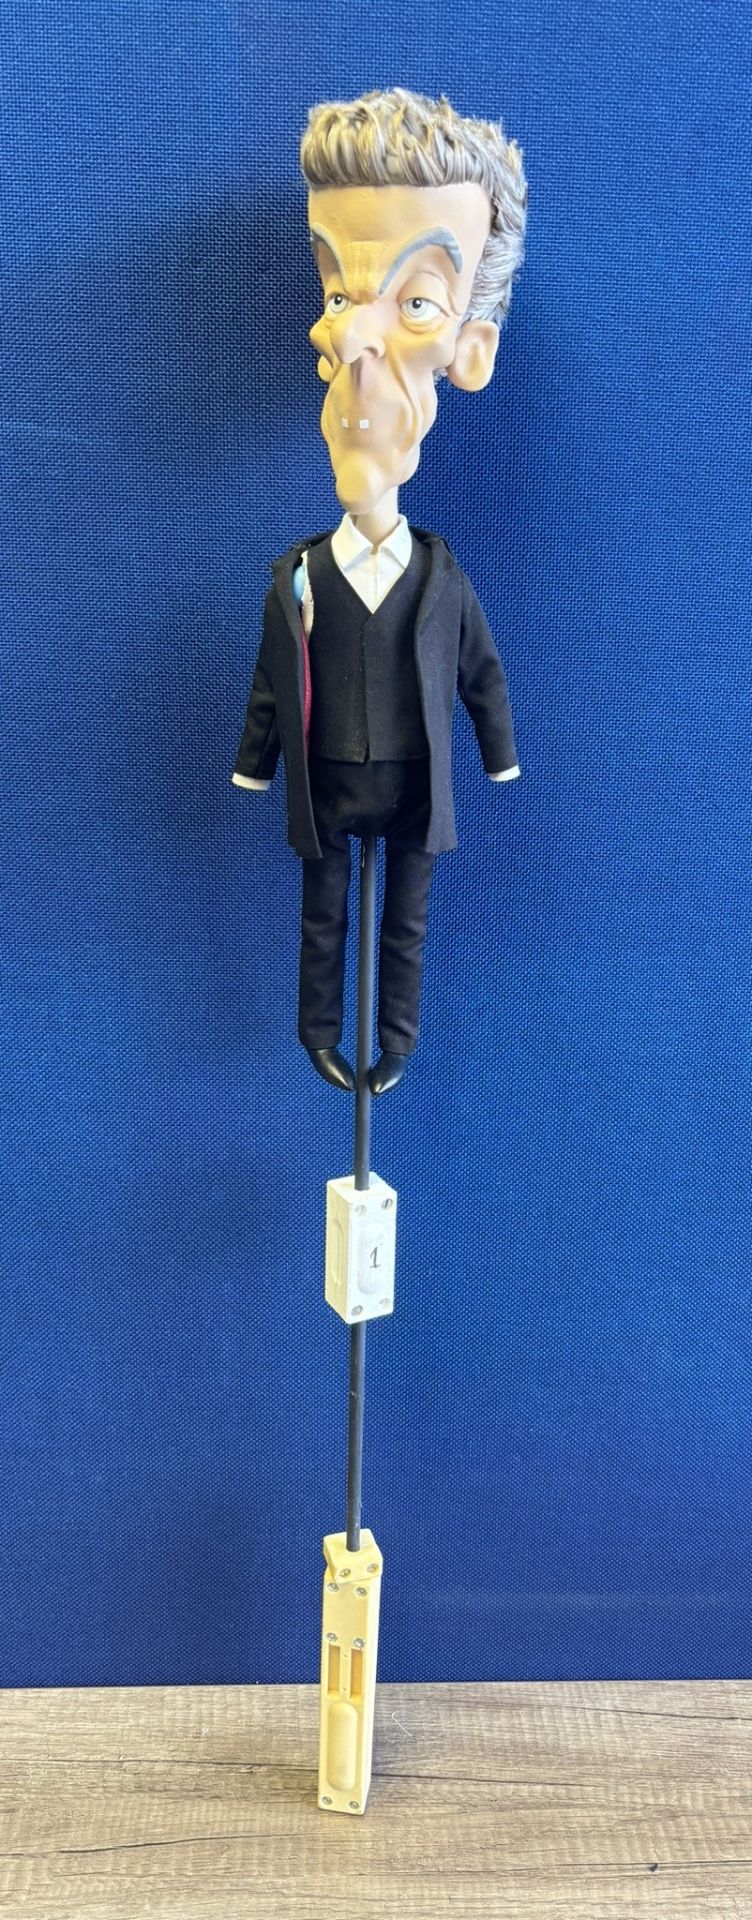 Newzoid puppet - Peter Capaldi - Image 4 of 5